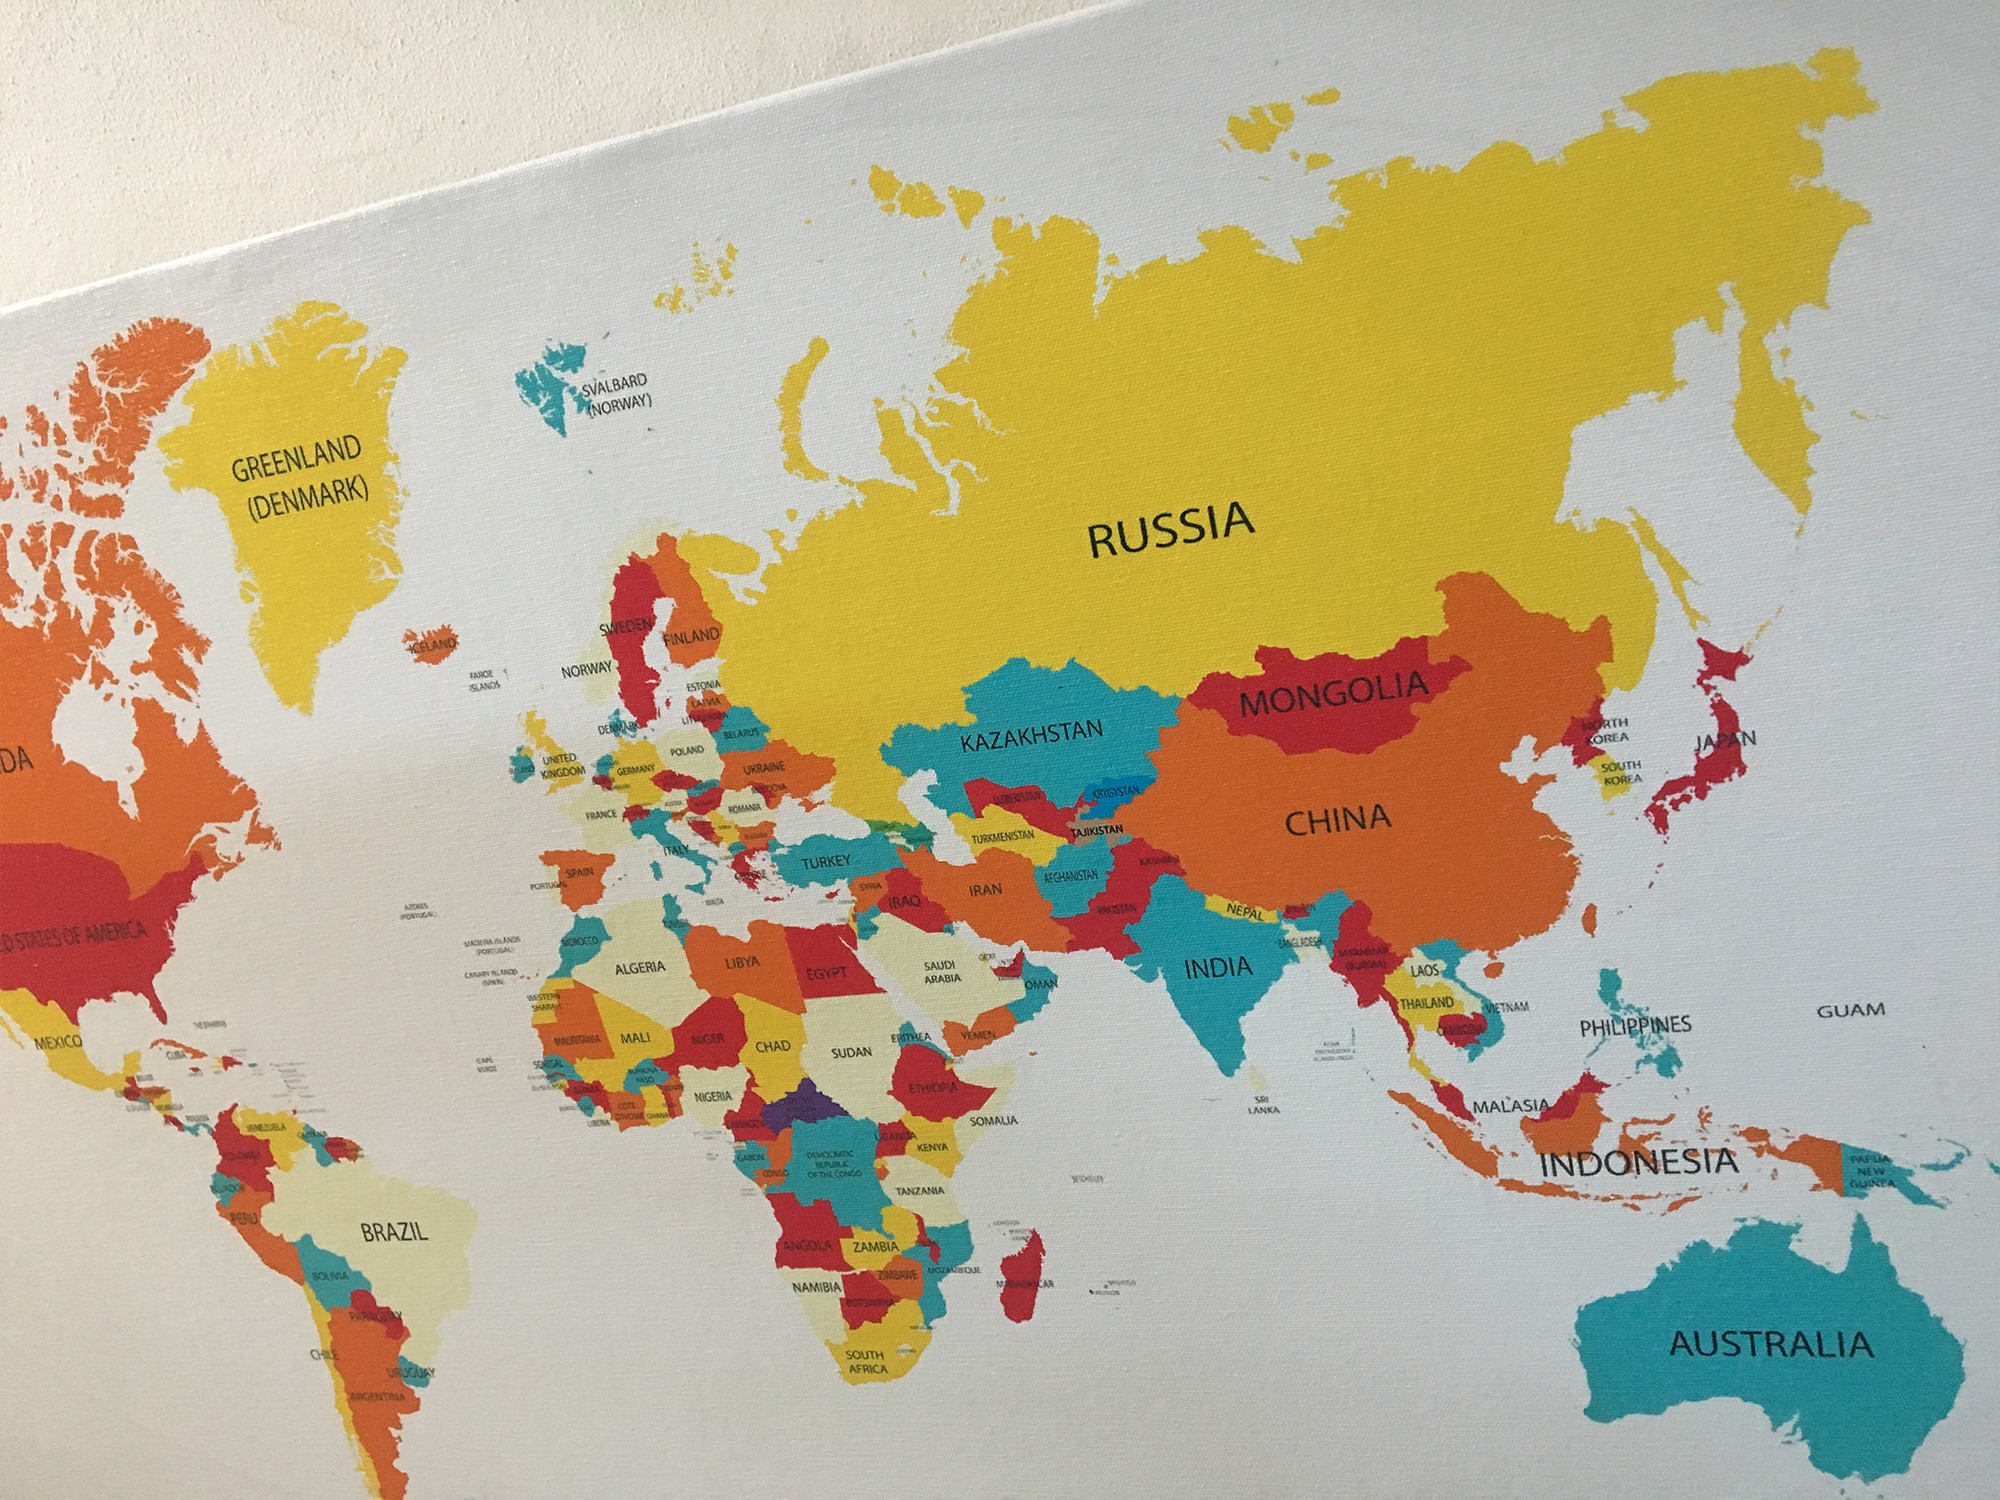 202 - Classic World Map